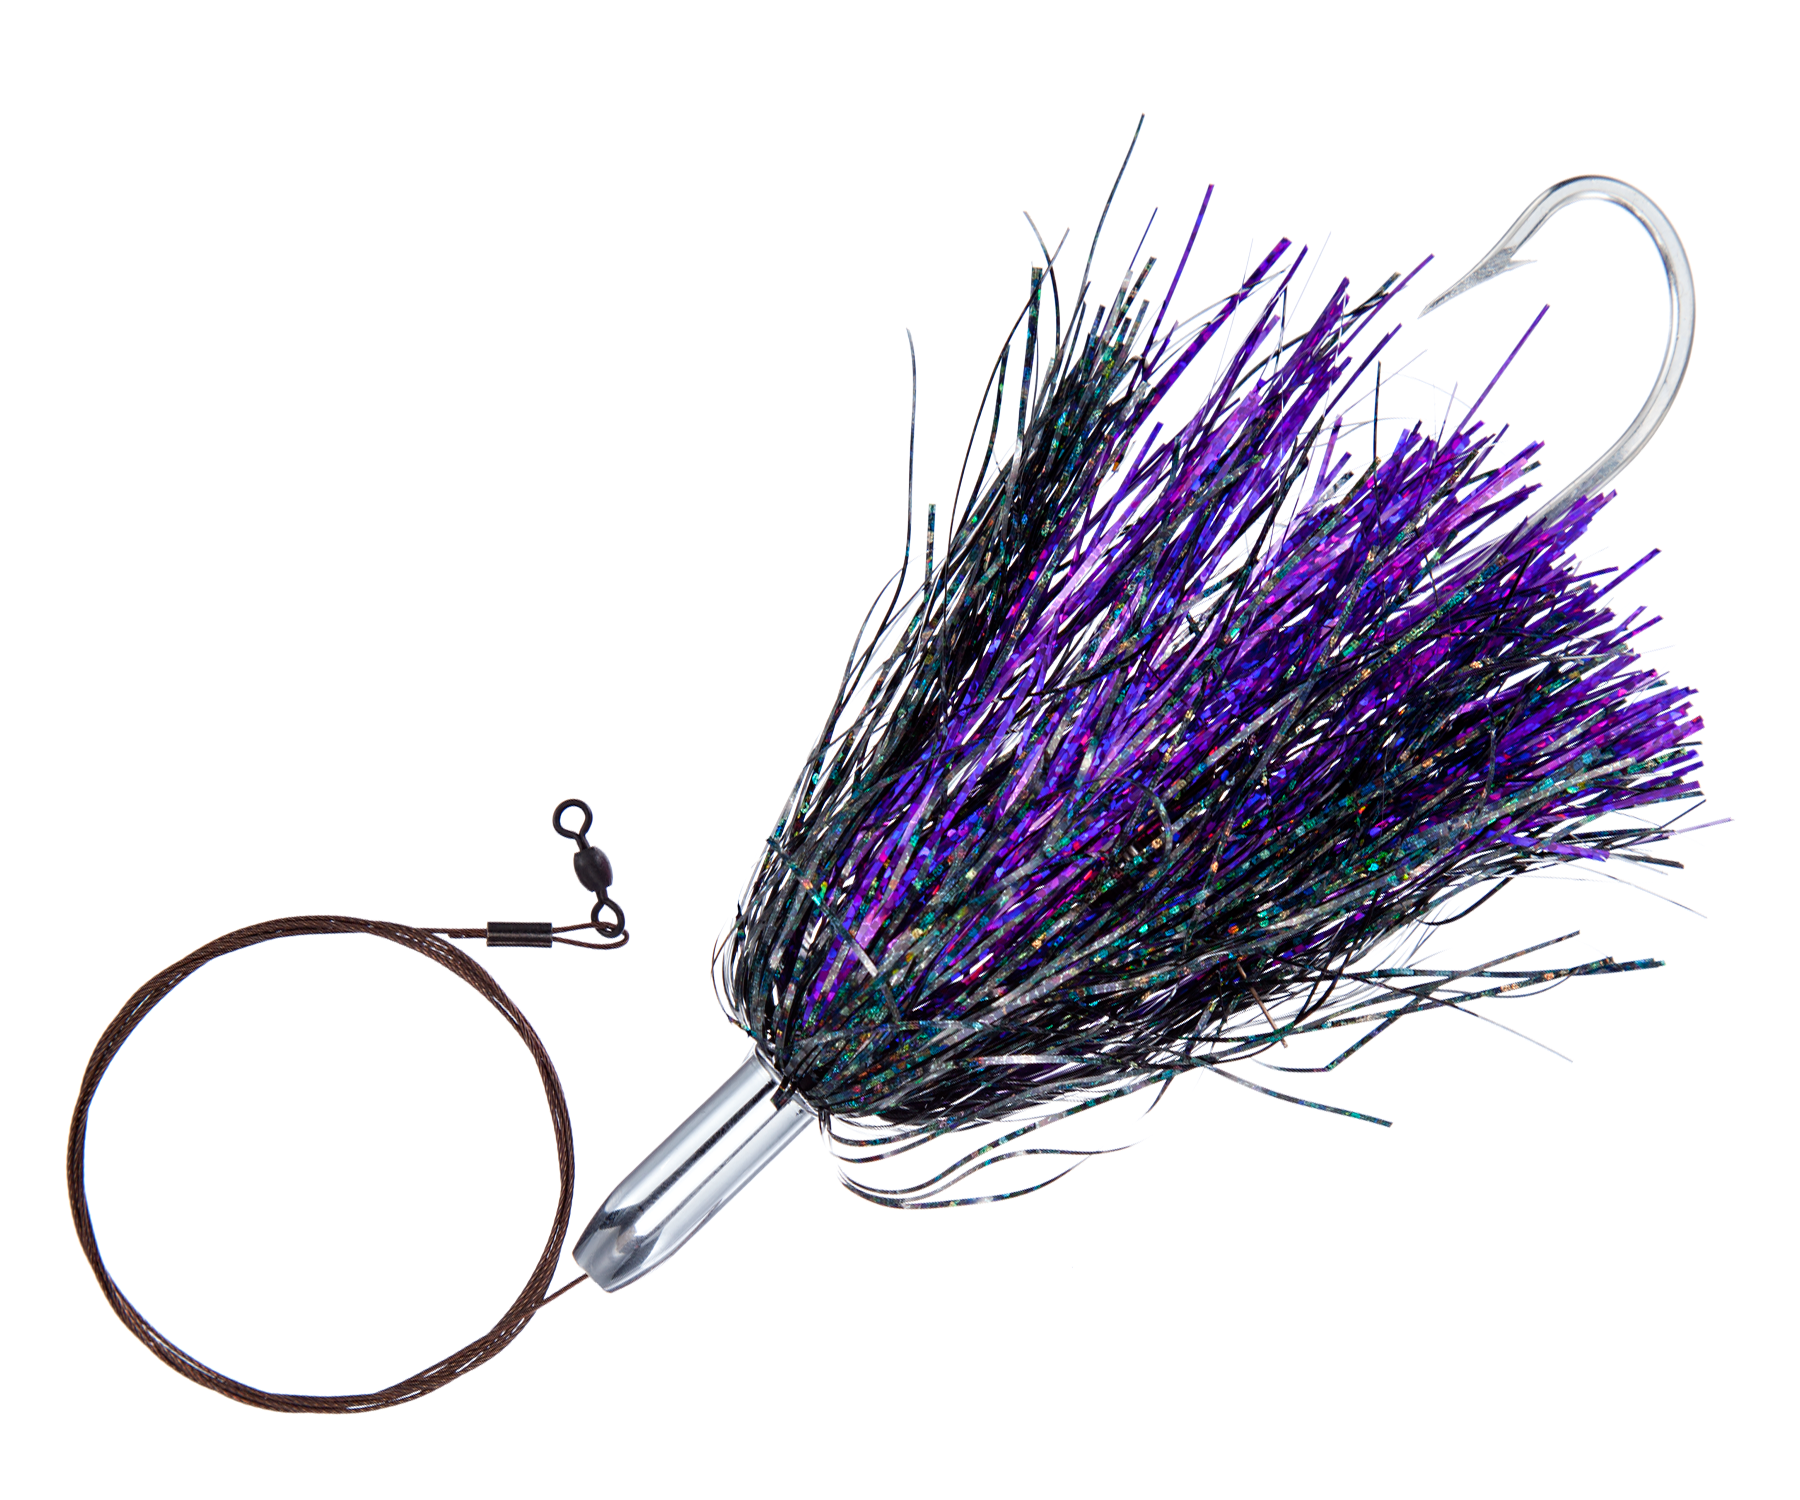 Billy Baits - Mini Turbo Slammer Lure - Rigged & Ready Mono - Black-Purple/Purple Firetip 37 